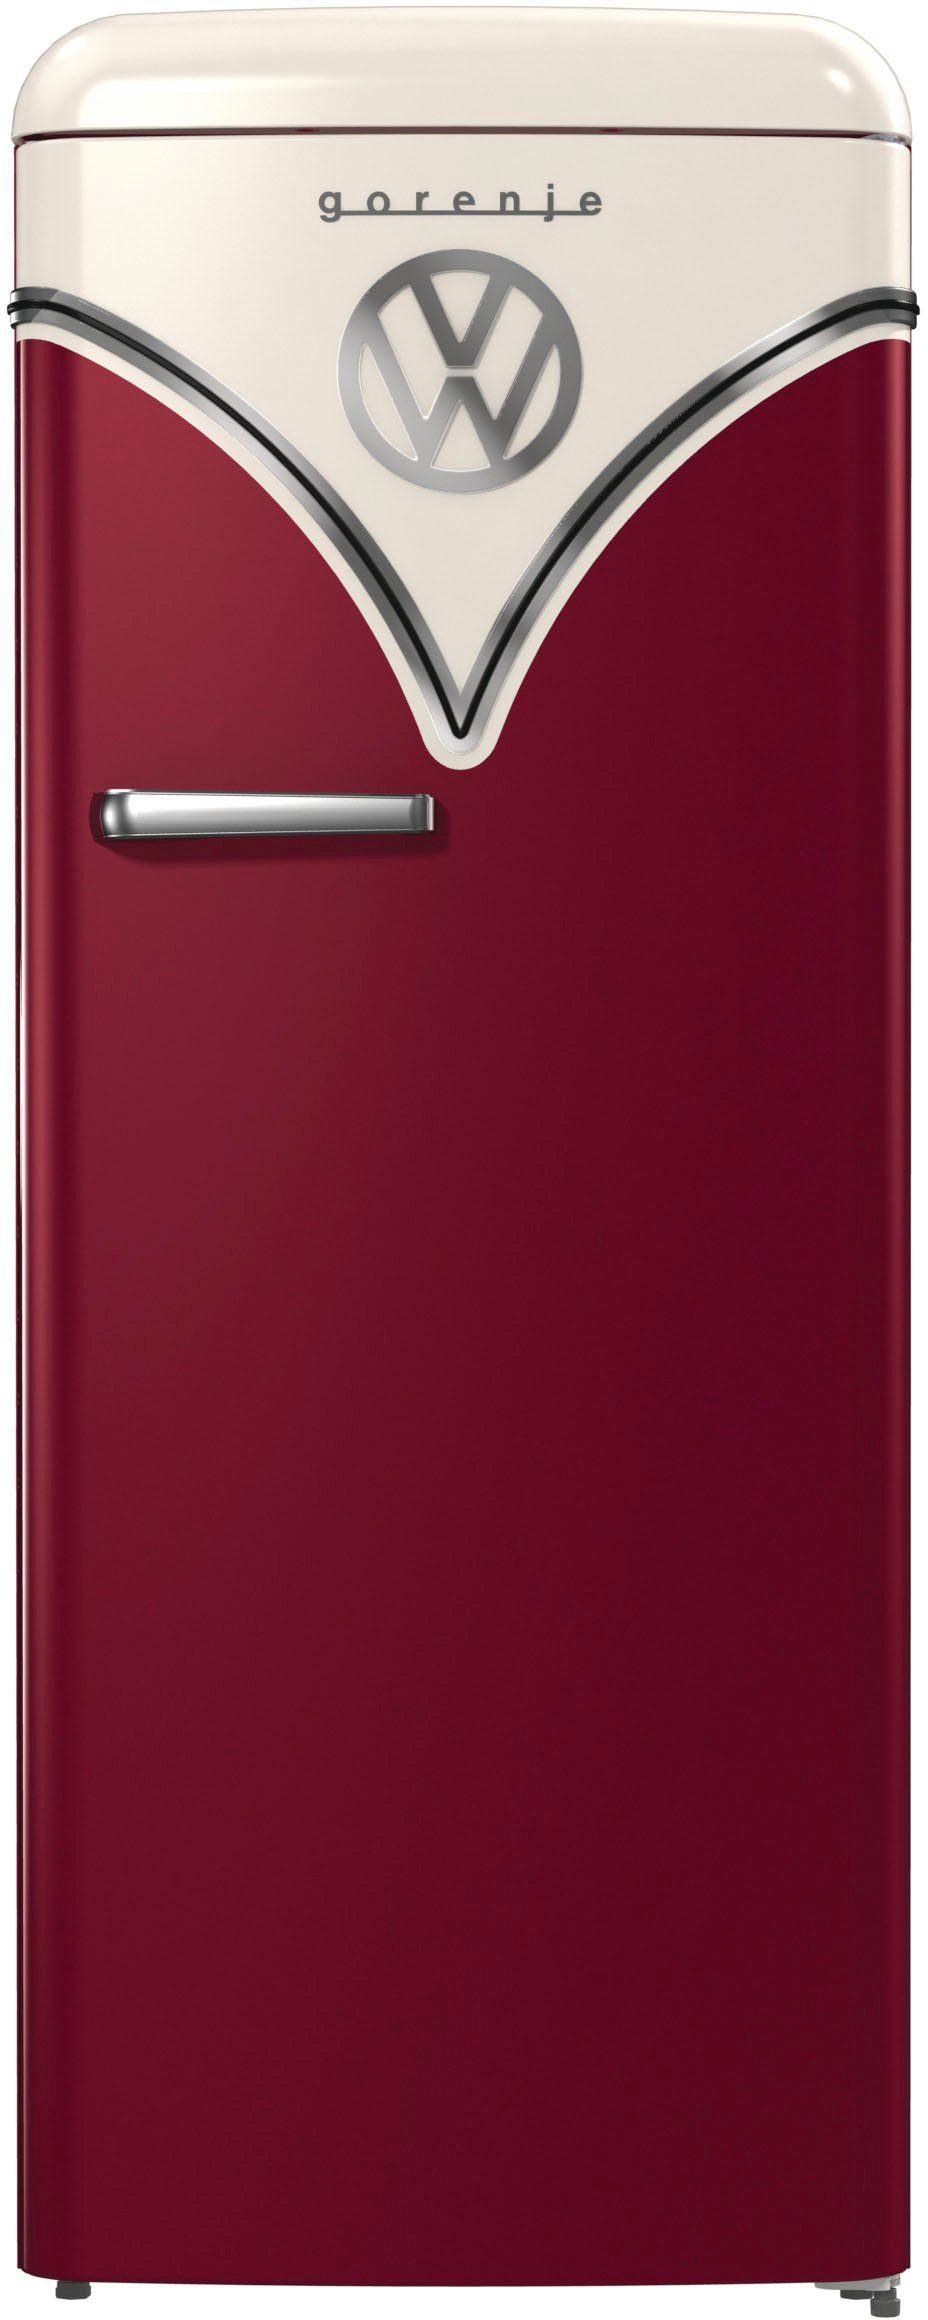 GORENJE Kühlschrank OBRB615DR, 152,5 cm hoch, 59,5 cm breit bordeaux